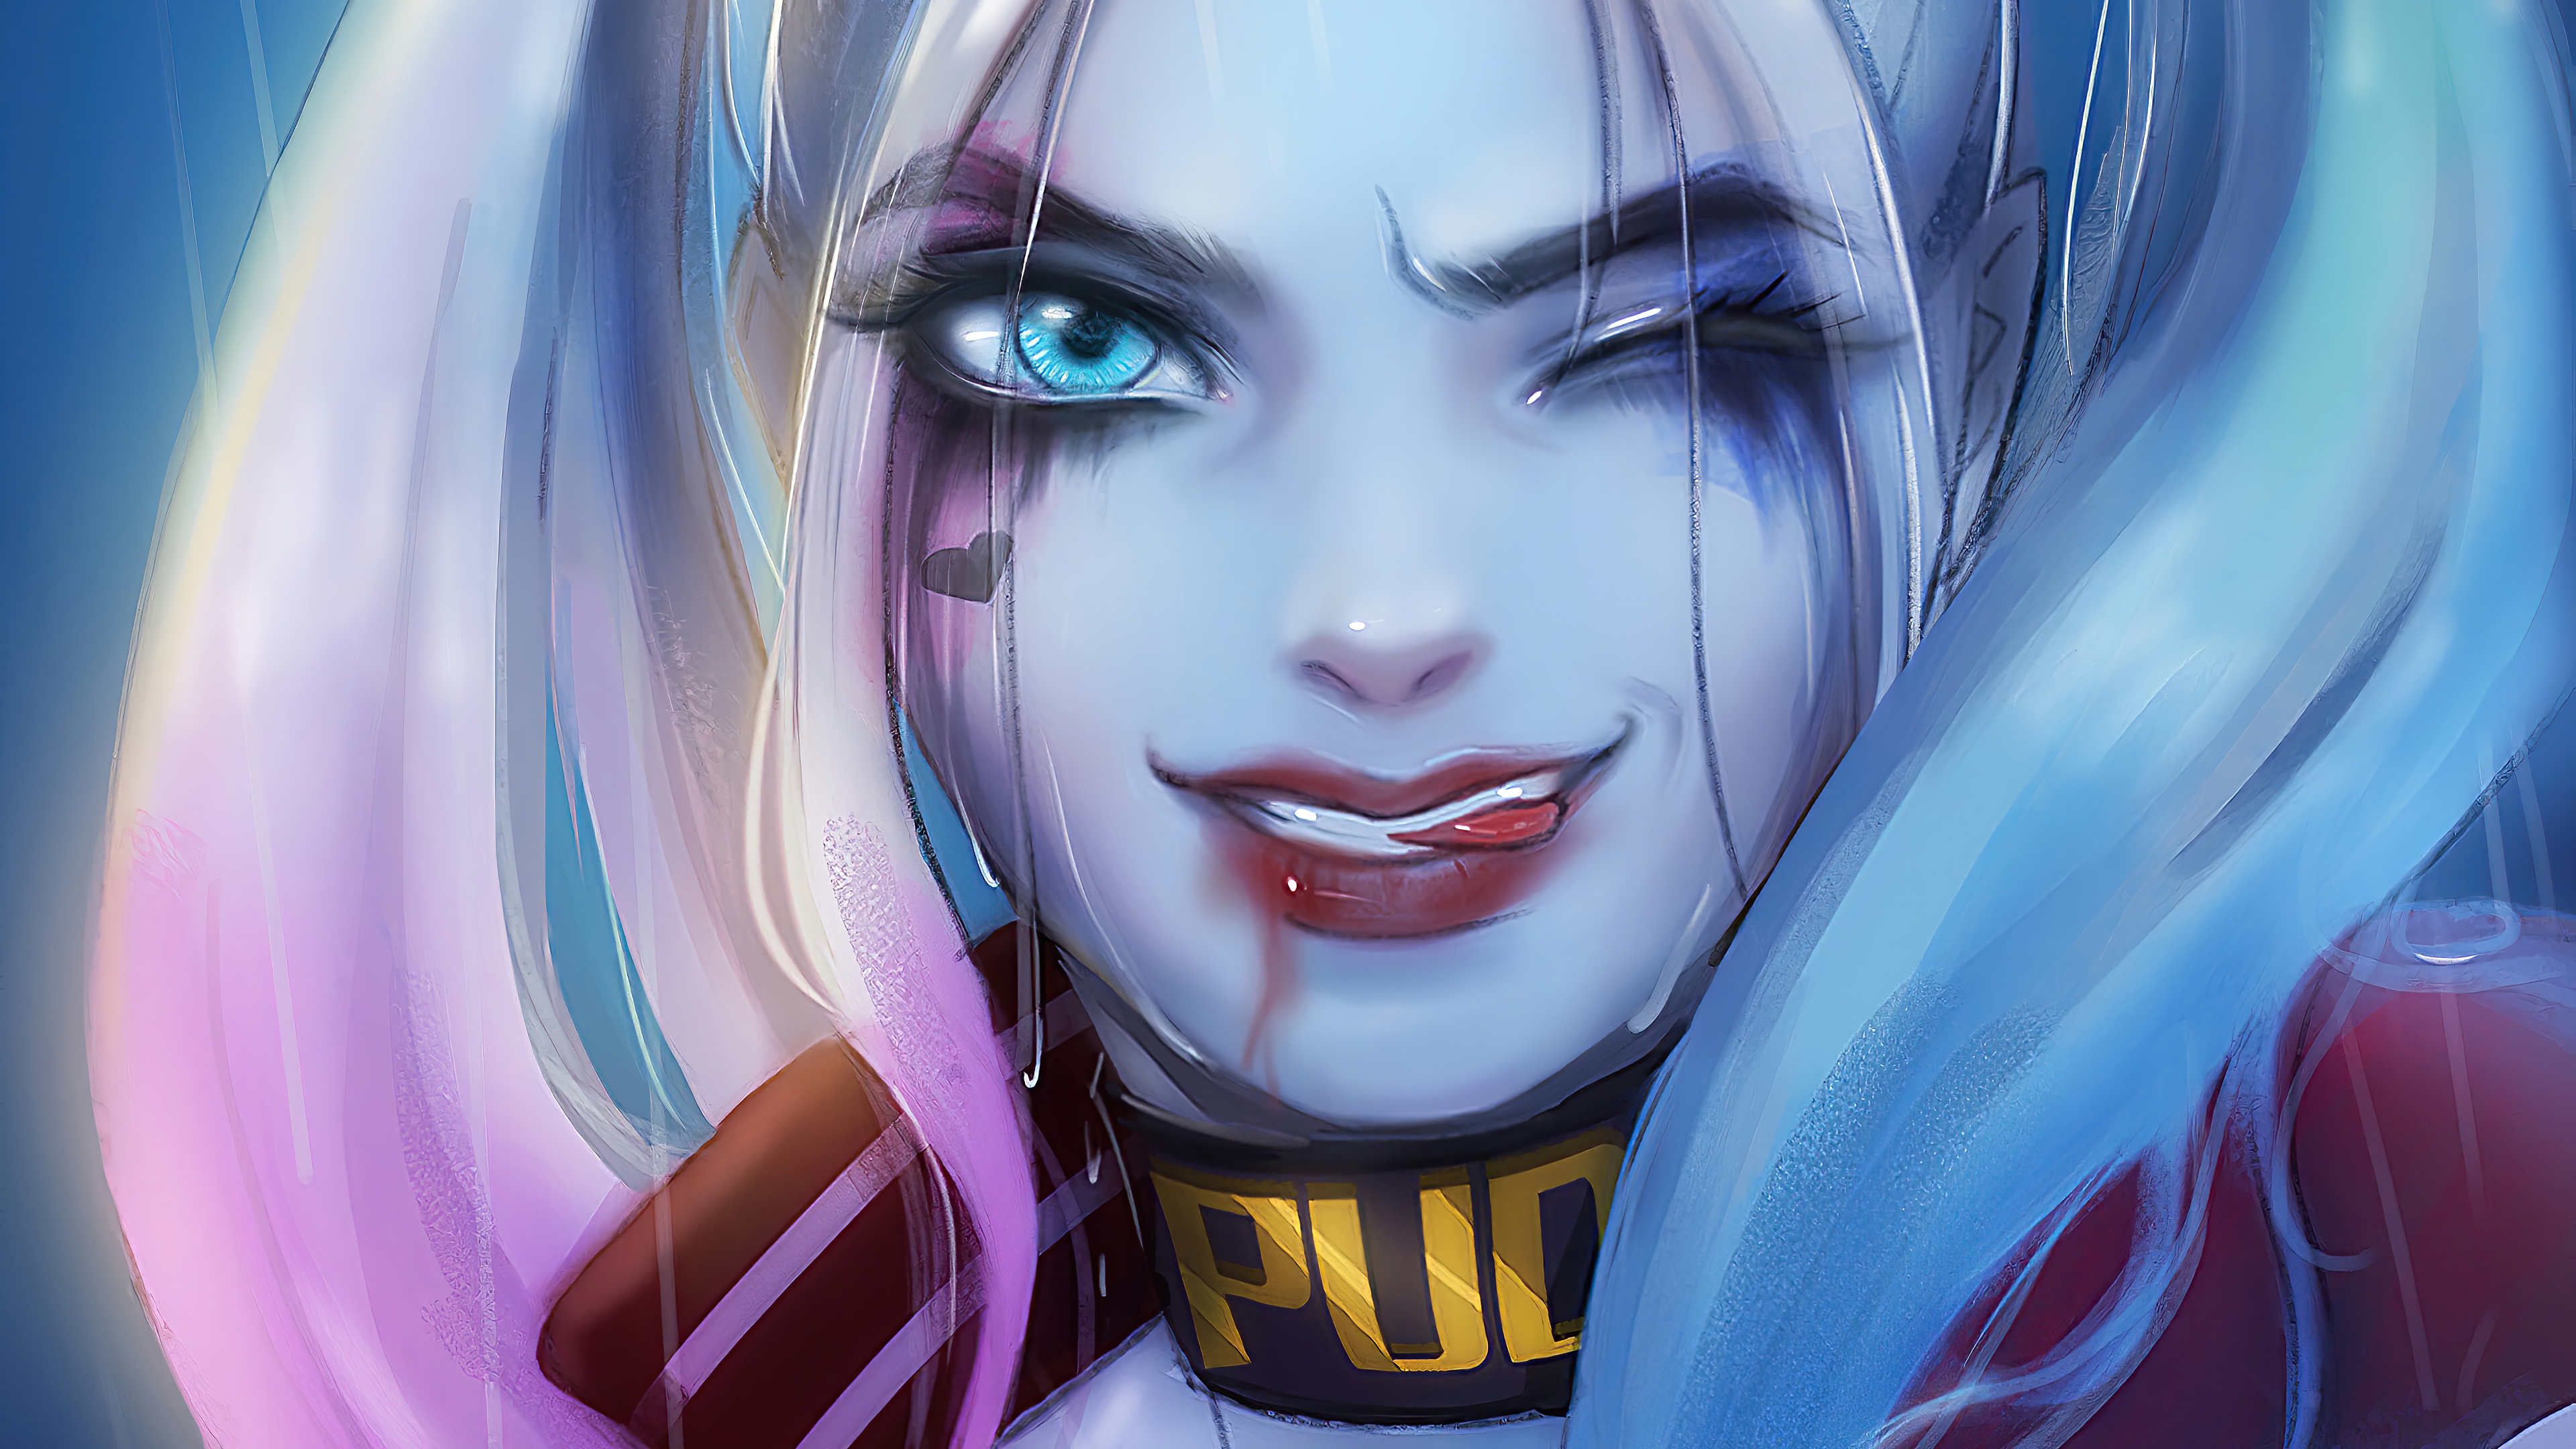 General 3840x2160 digital art artwork women Harley Quinn Suicide Squad twintails blue eyes biting wink choker